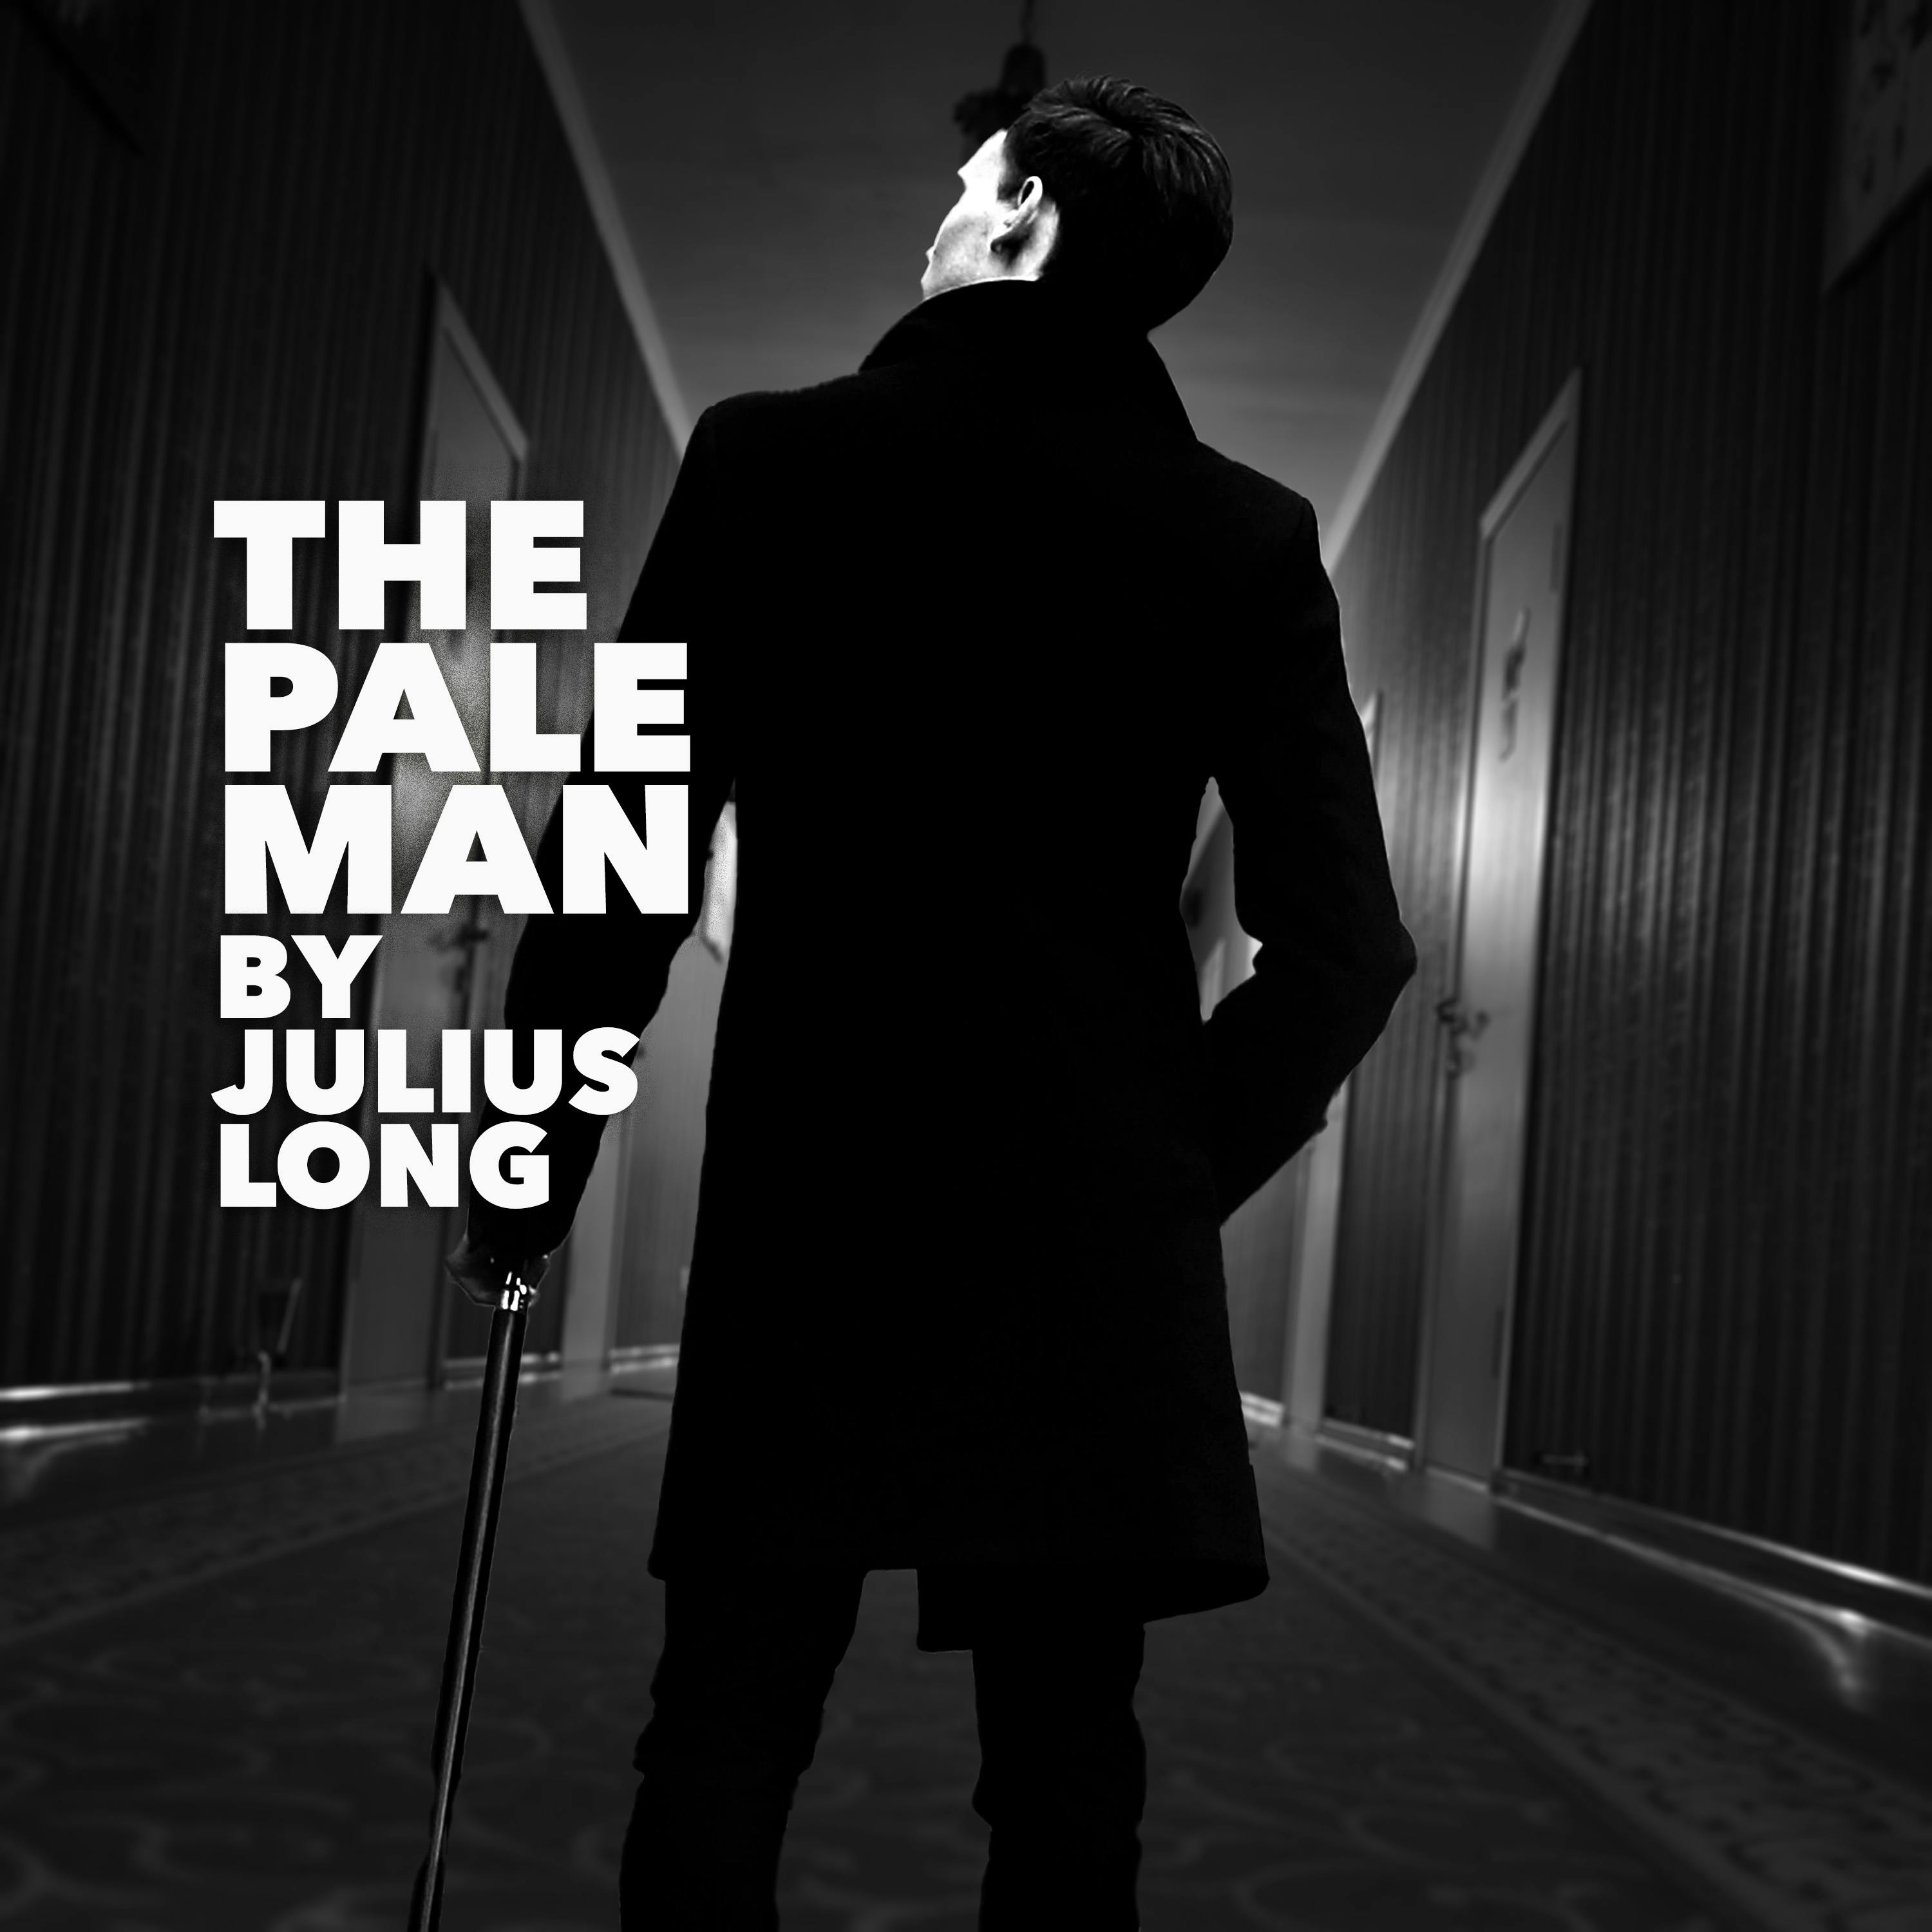 The Pale Man by Julius Long